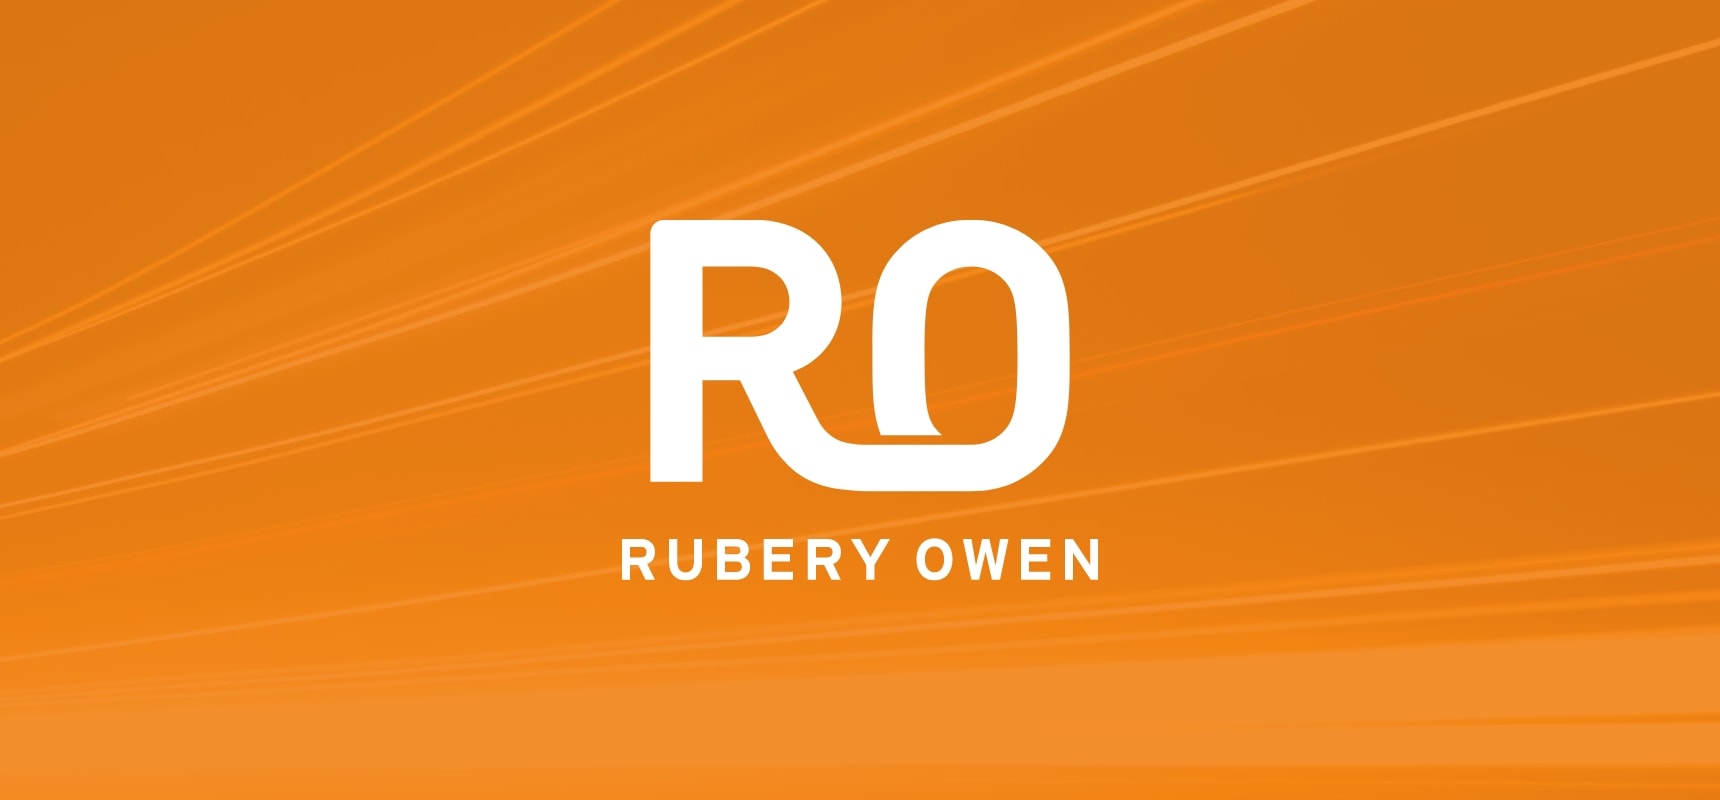 Rubery Owen logo design